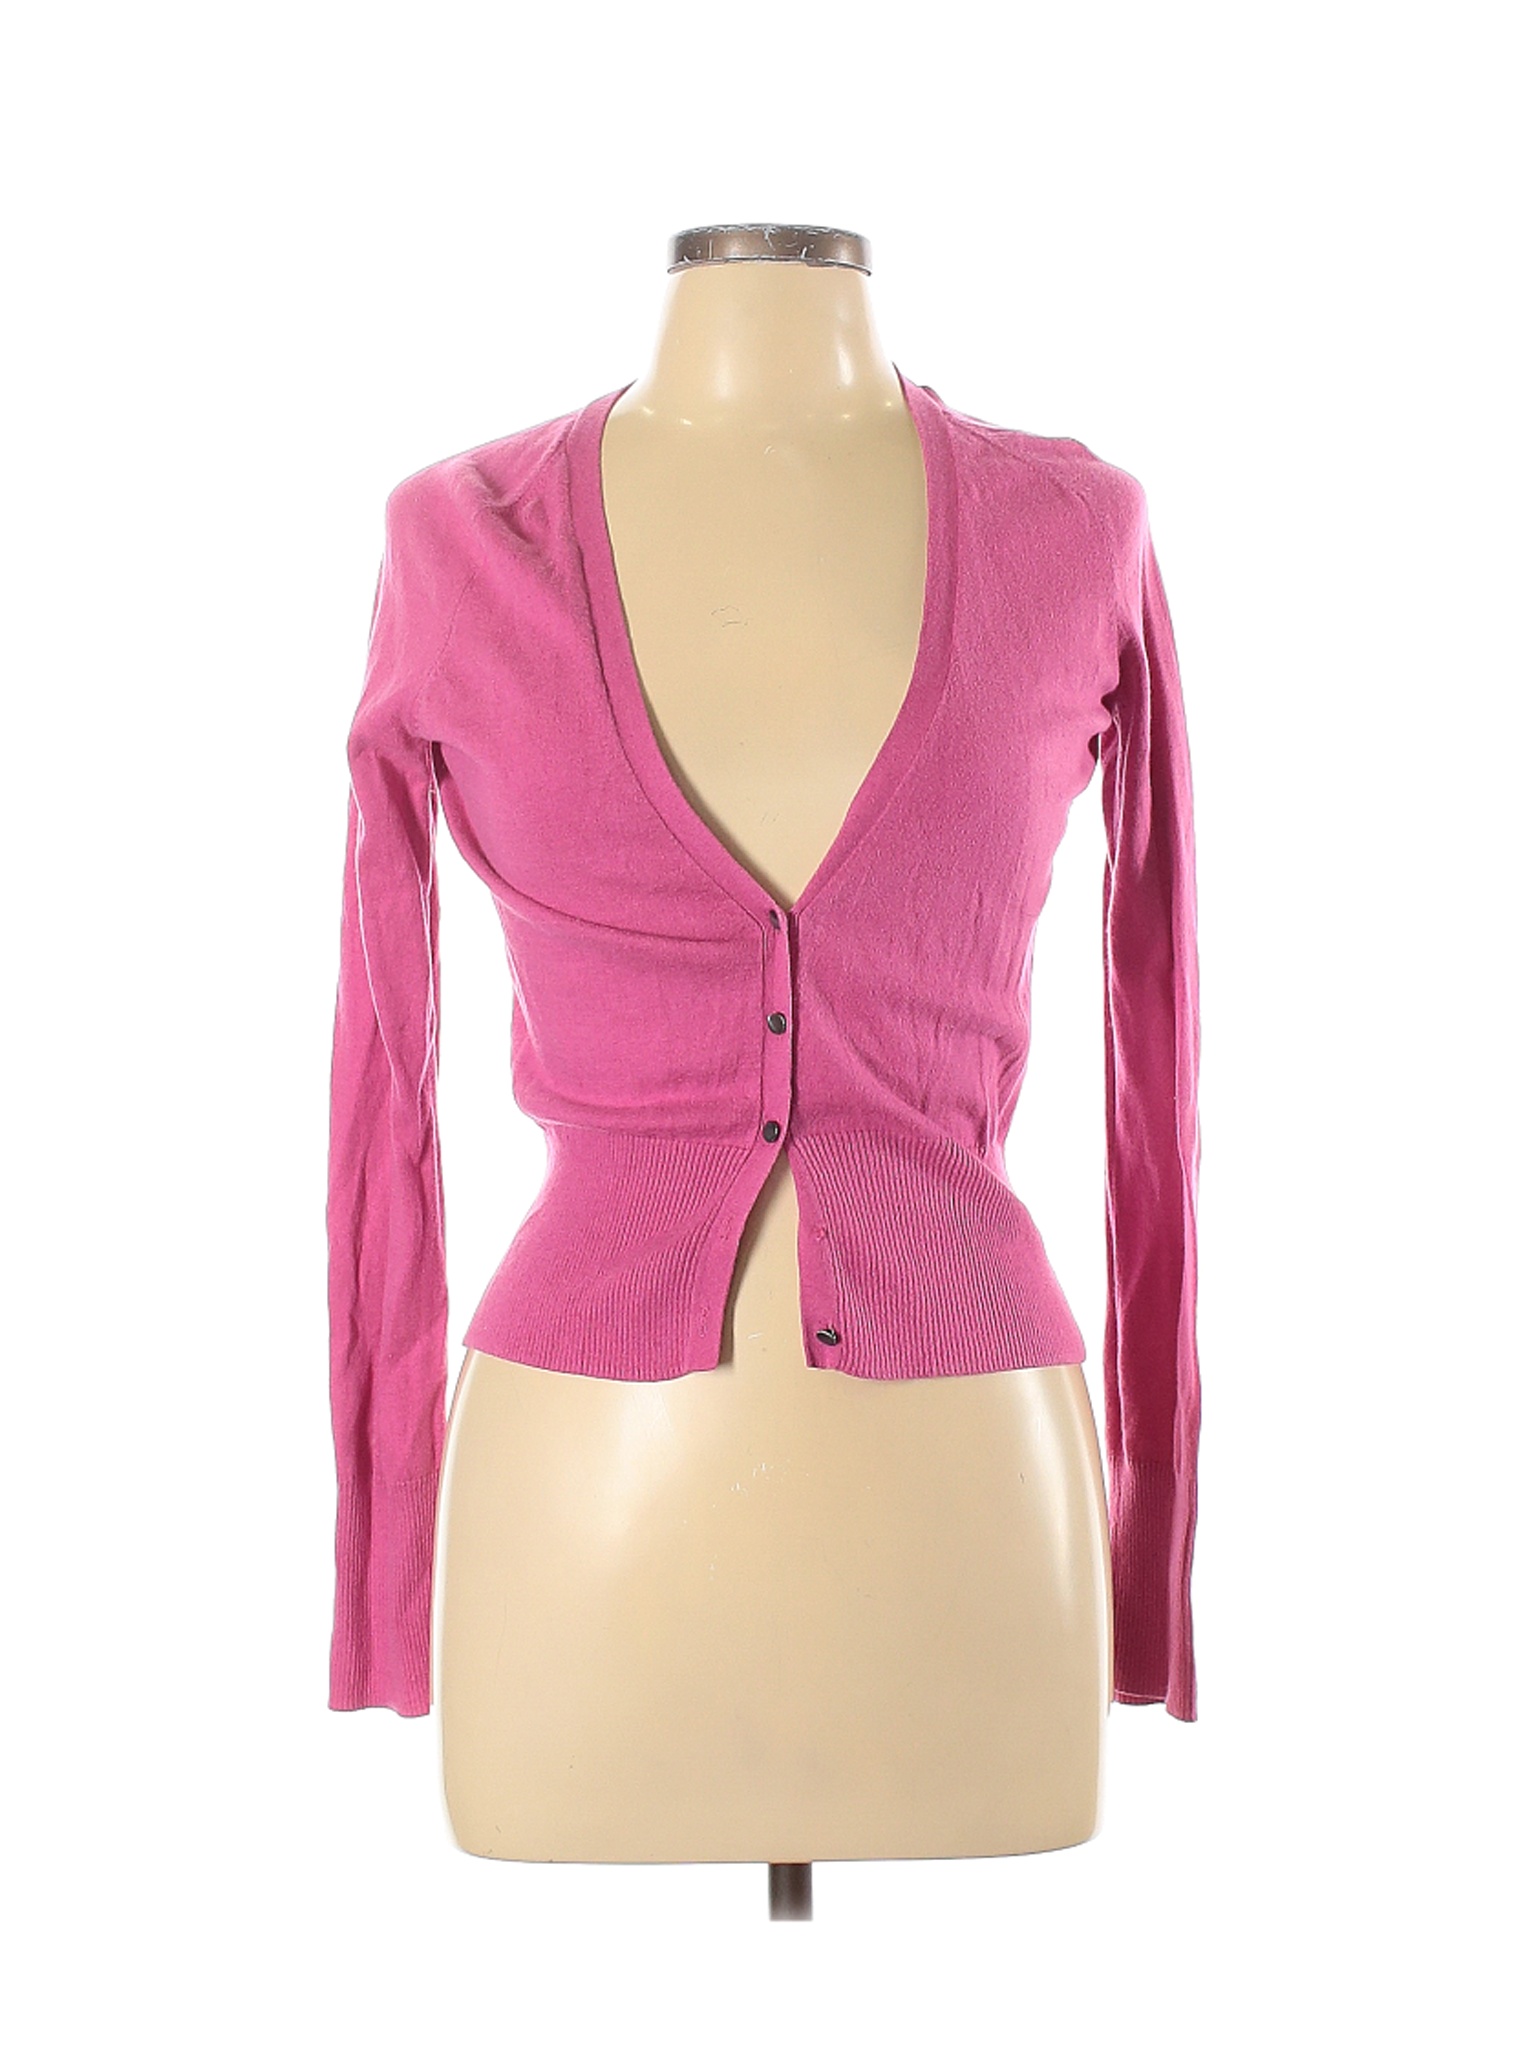 Express Women Pink Cardigan L | eBay